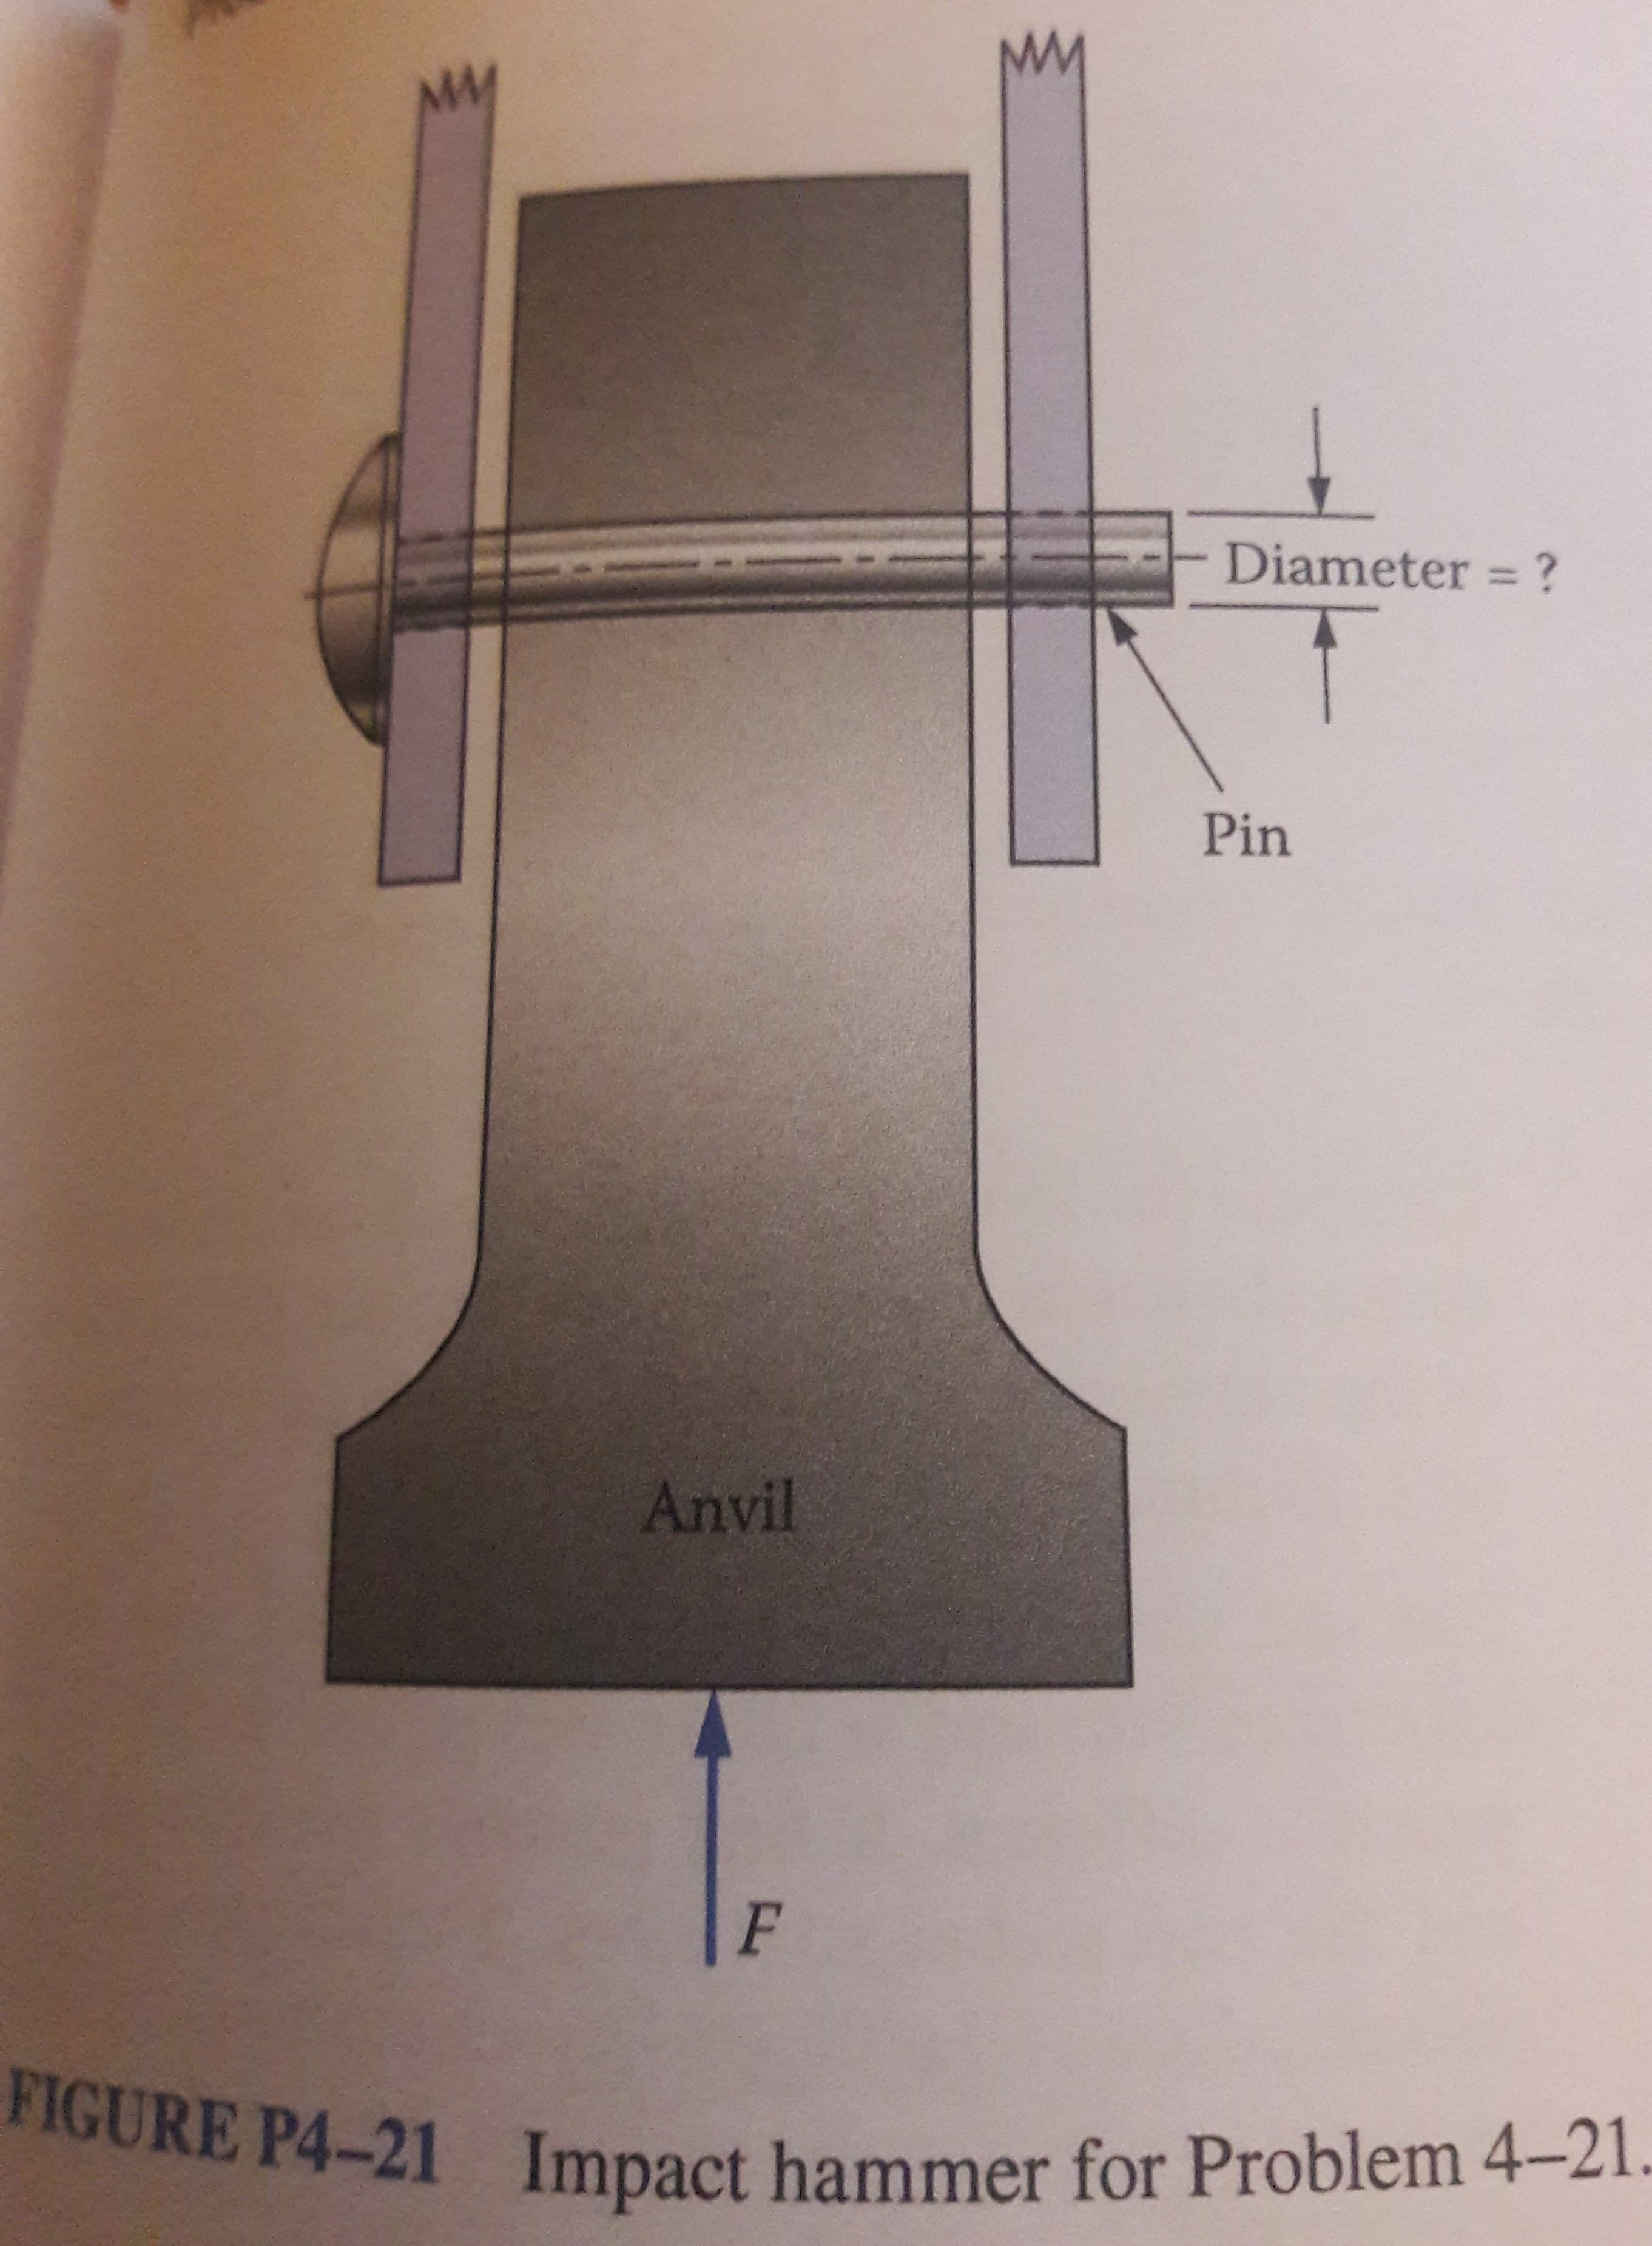 MV
MM
Diameter = ?
%3D
Pin
Anvil
FIGURE P4-21 Impact hammer for Problem 4-21.
